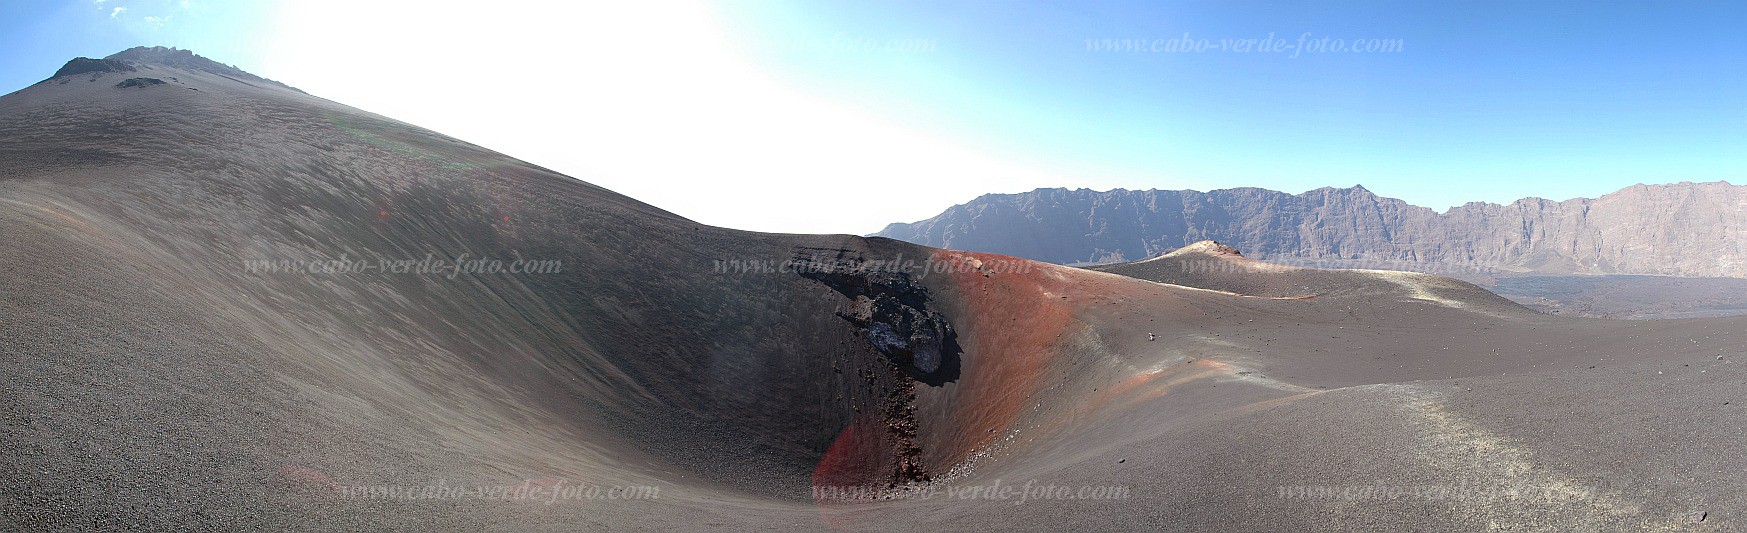 Fogo : Pico Pequeno : cratra : Landscape MountainCabo Verde Foto Gallery